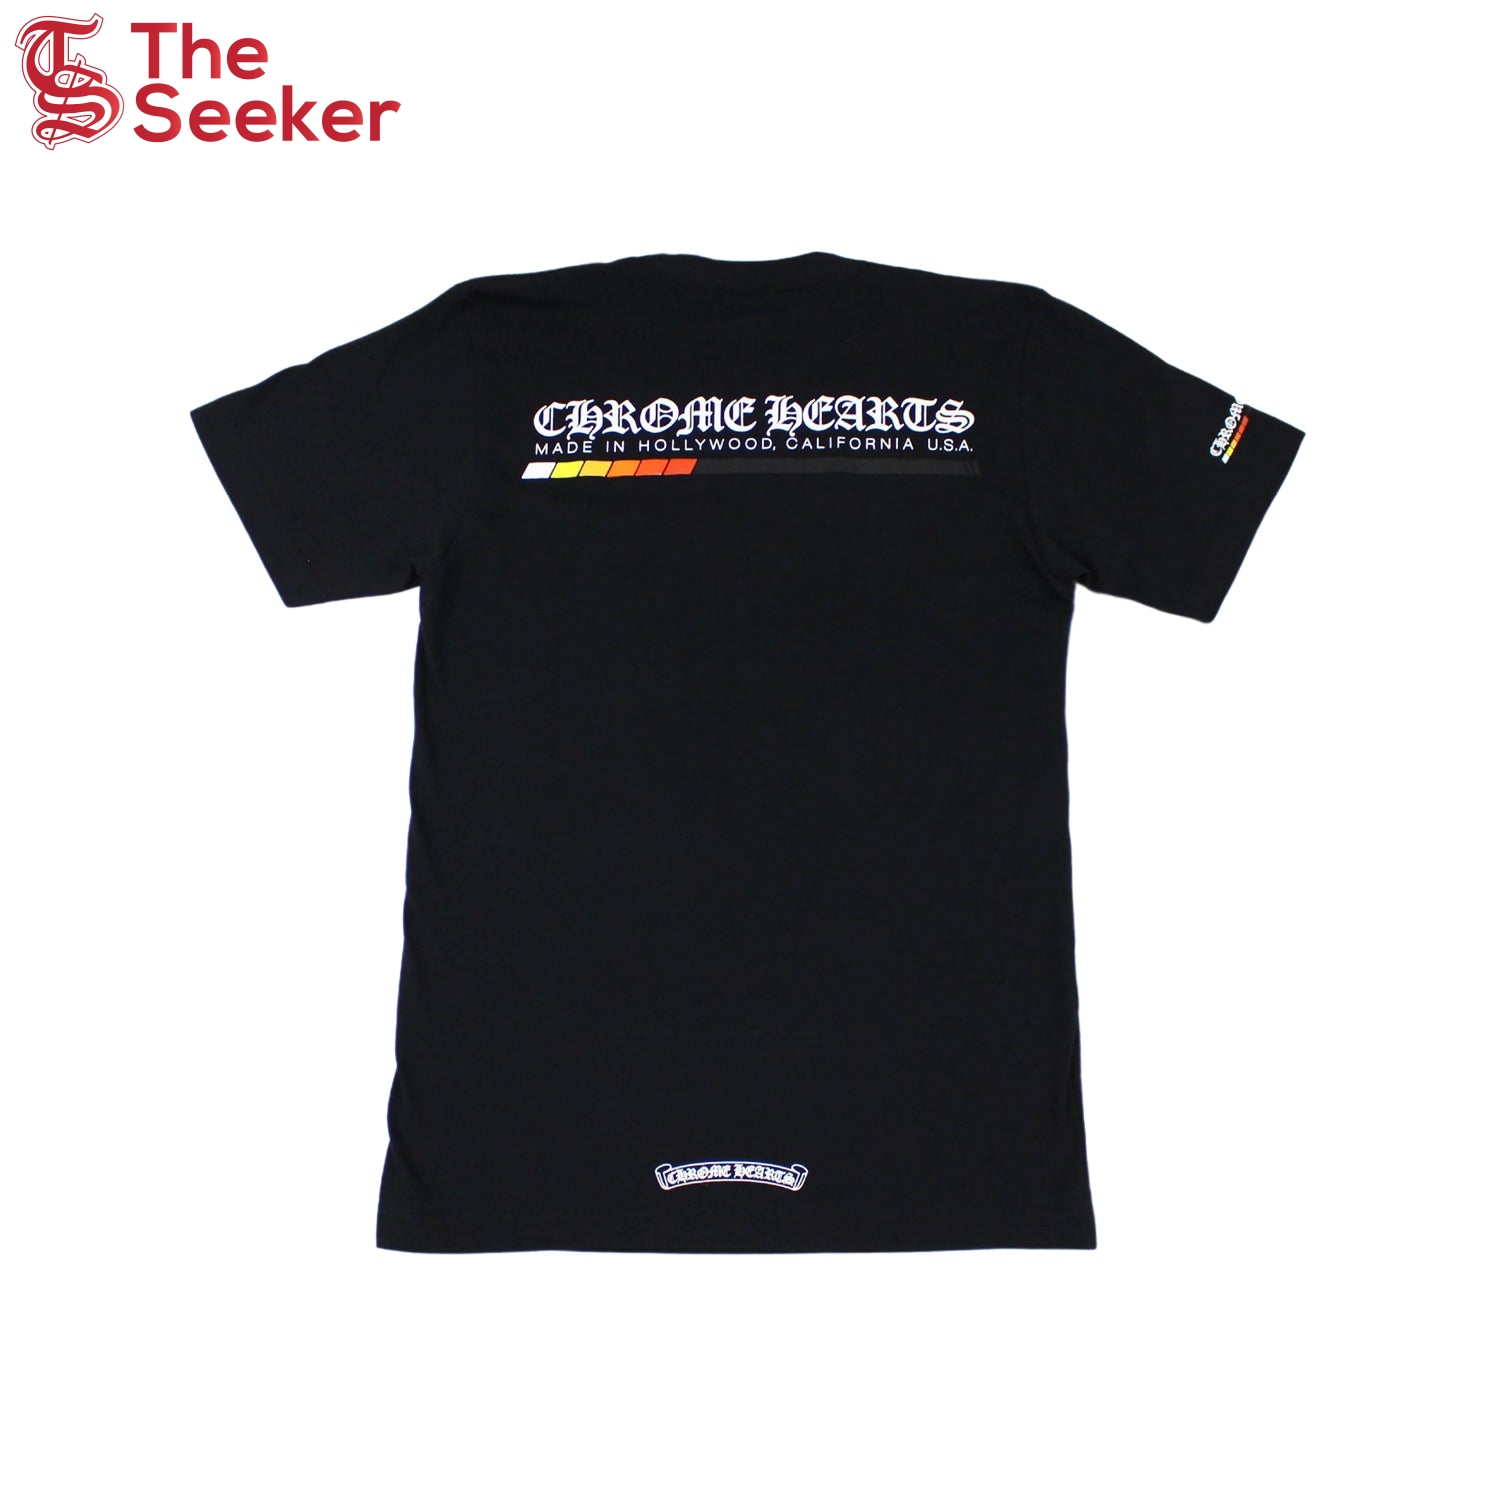 Chrome Hearts Boost T-shirt Black